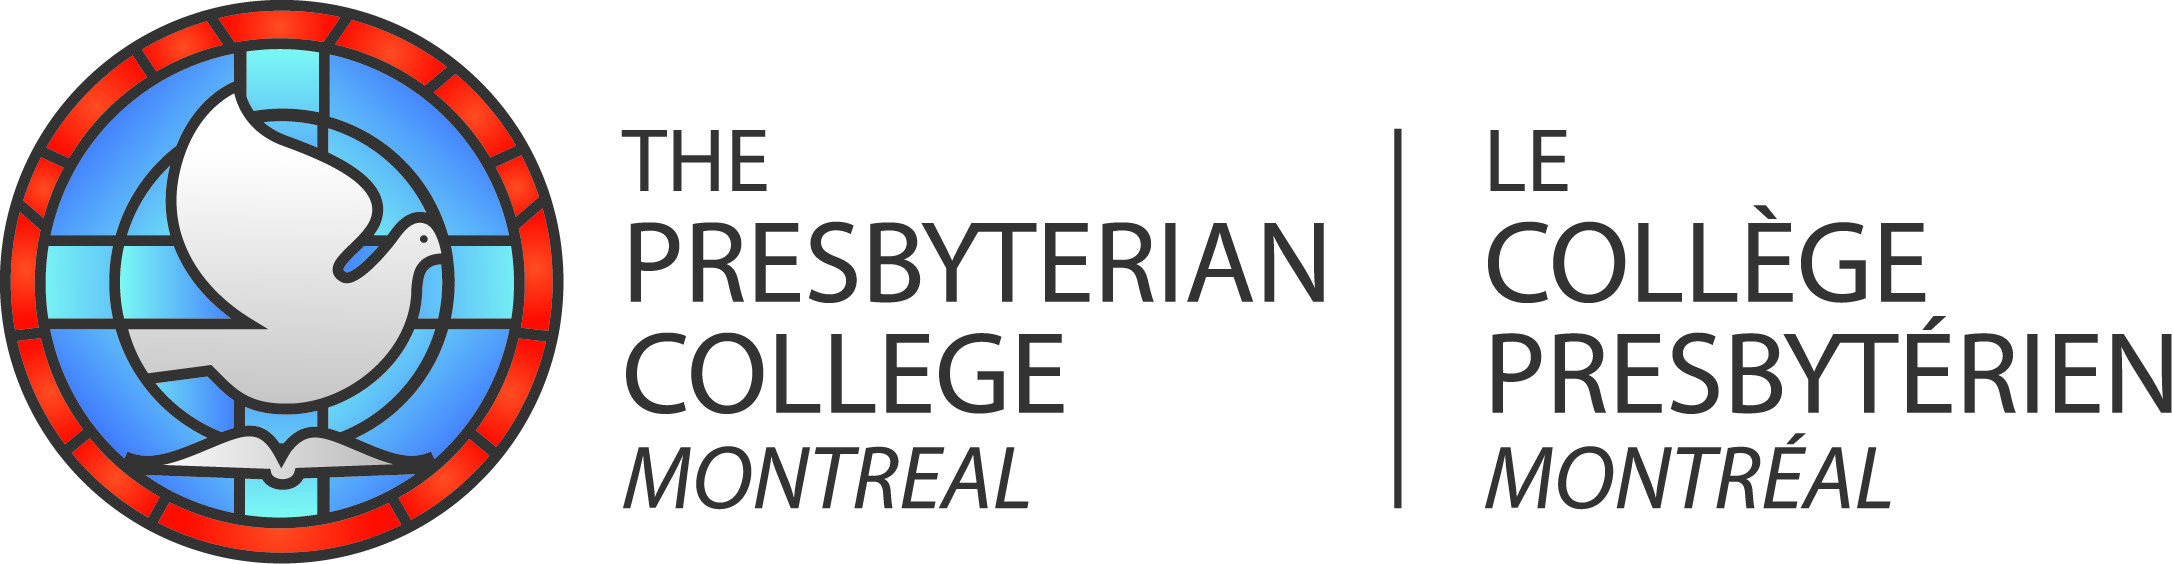 The Presbyterian College